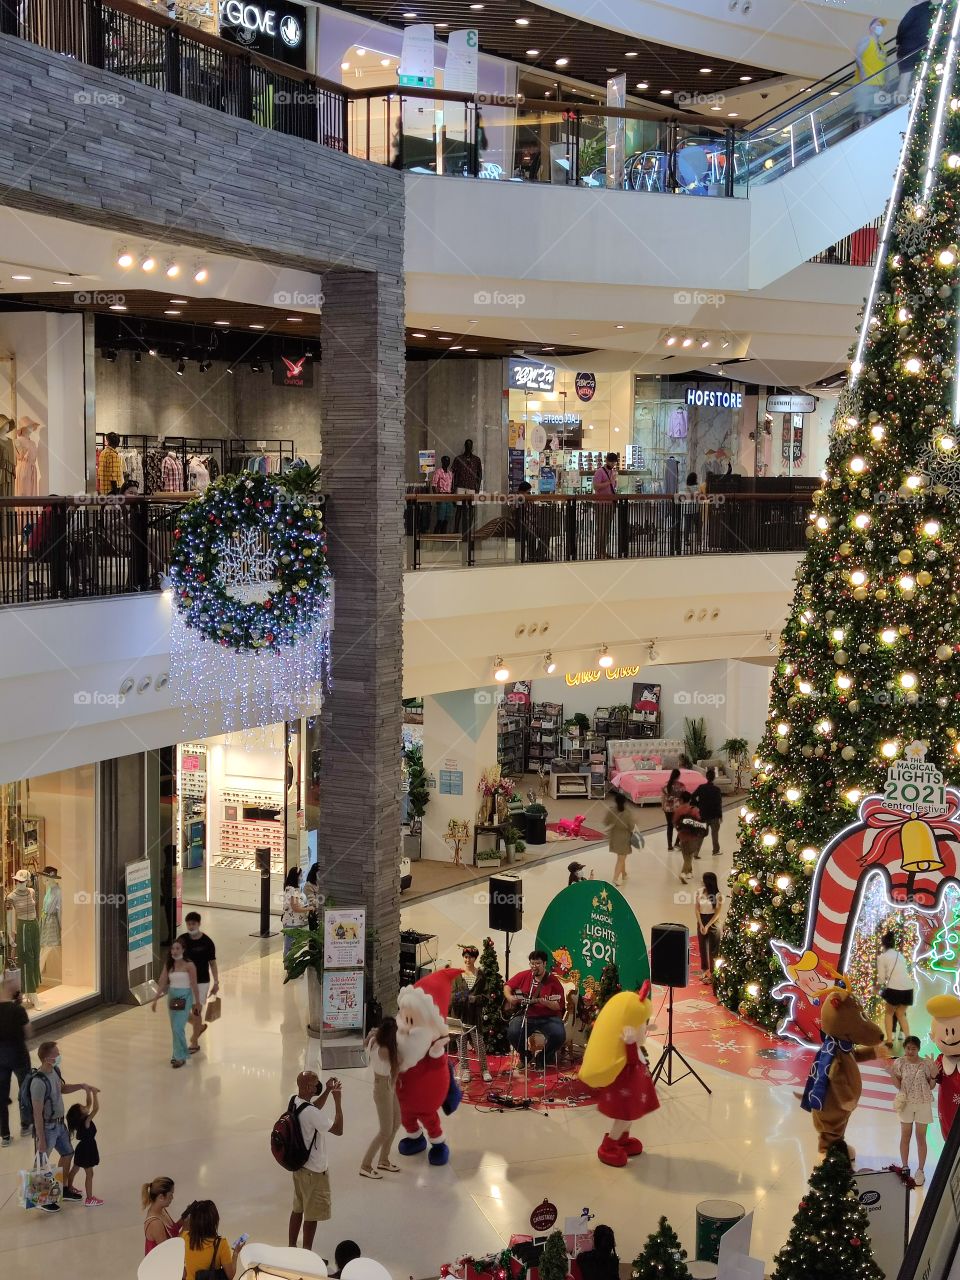 Gigantic Christmas tree inside a shopping mall